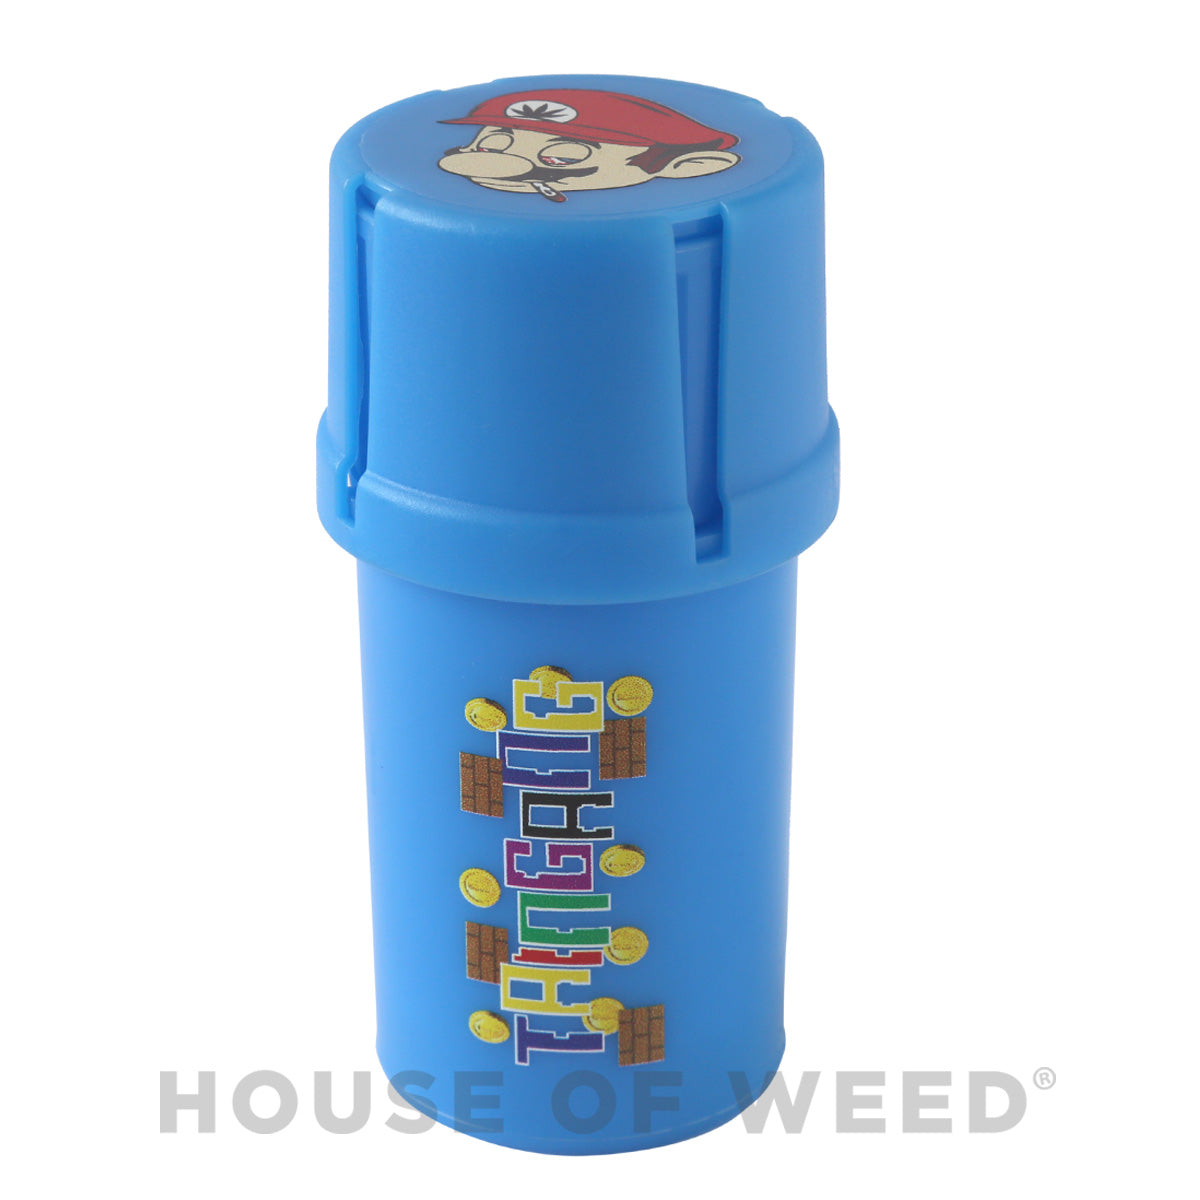 Contenedor y Moledor para Cannabis modelo Mario Bross Color azul con Mario fumando